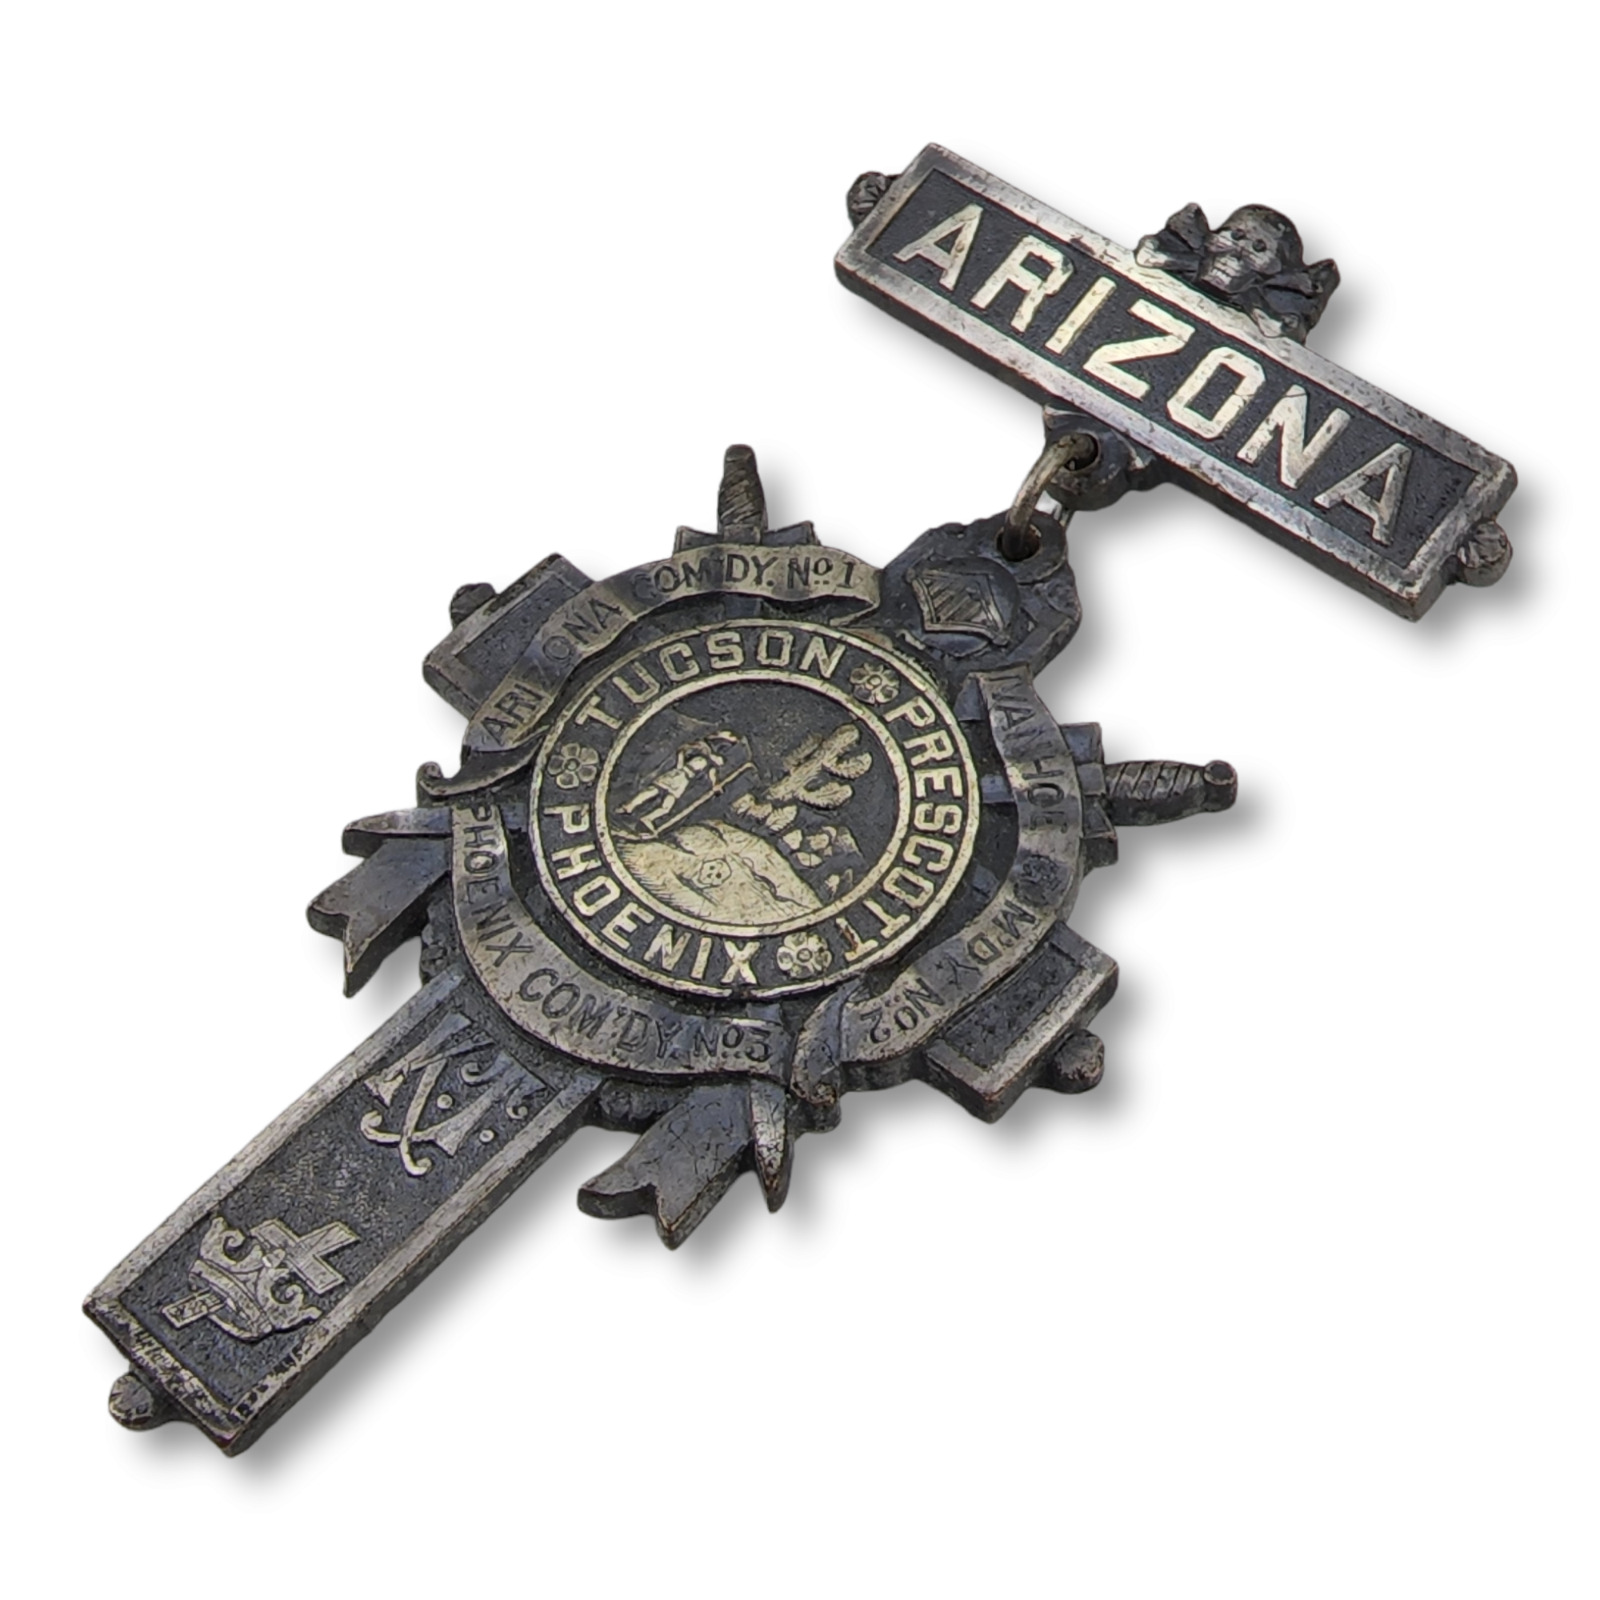 Vintage GG Braxmar Arizona Knights Templar Com'dy Pin Tucson Prescott Phoenix